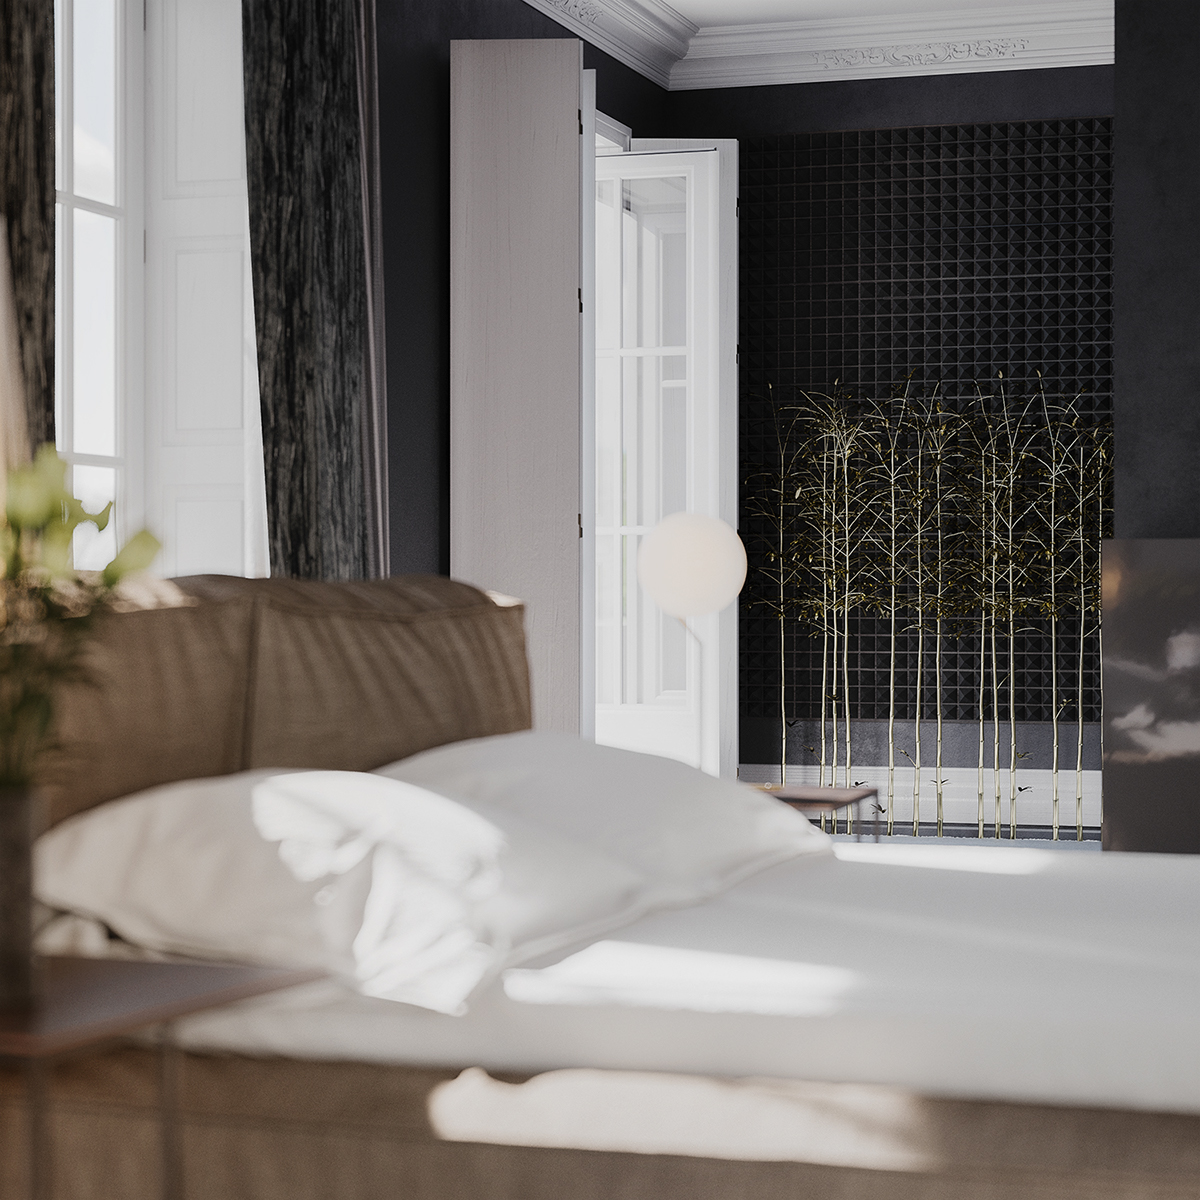 cote d'azur bedroom Interior bed linen bright vray Vizualization Render design Master house furniture modern eclectic